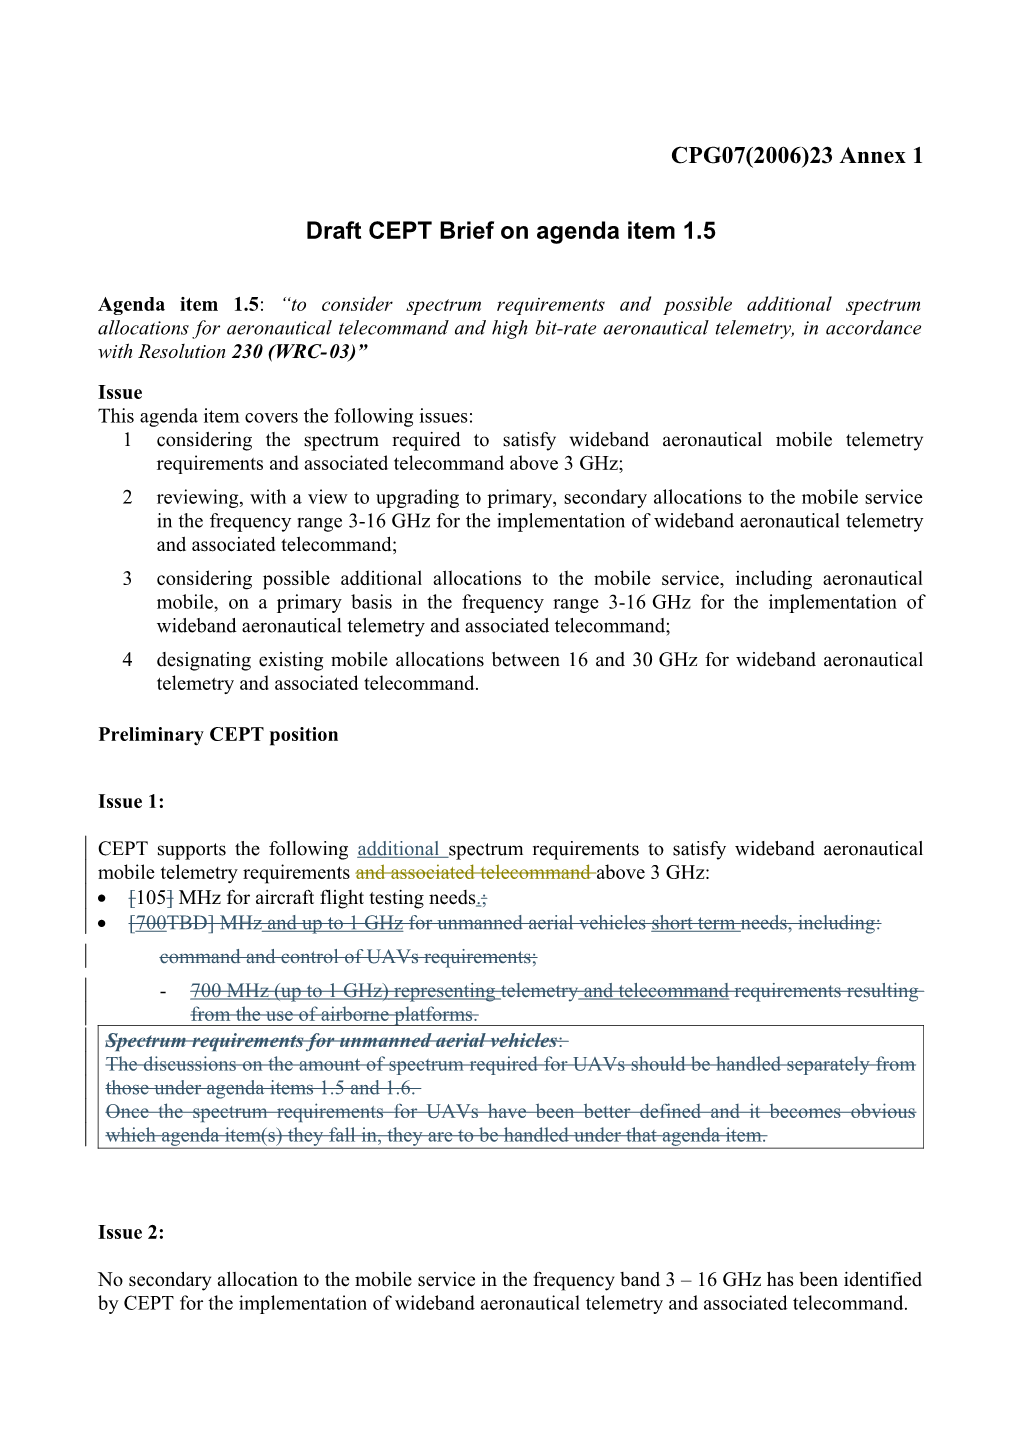 Draft CEPT Brief on WRC-07 Agenda Item 1.5